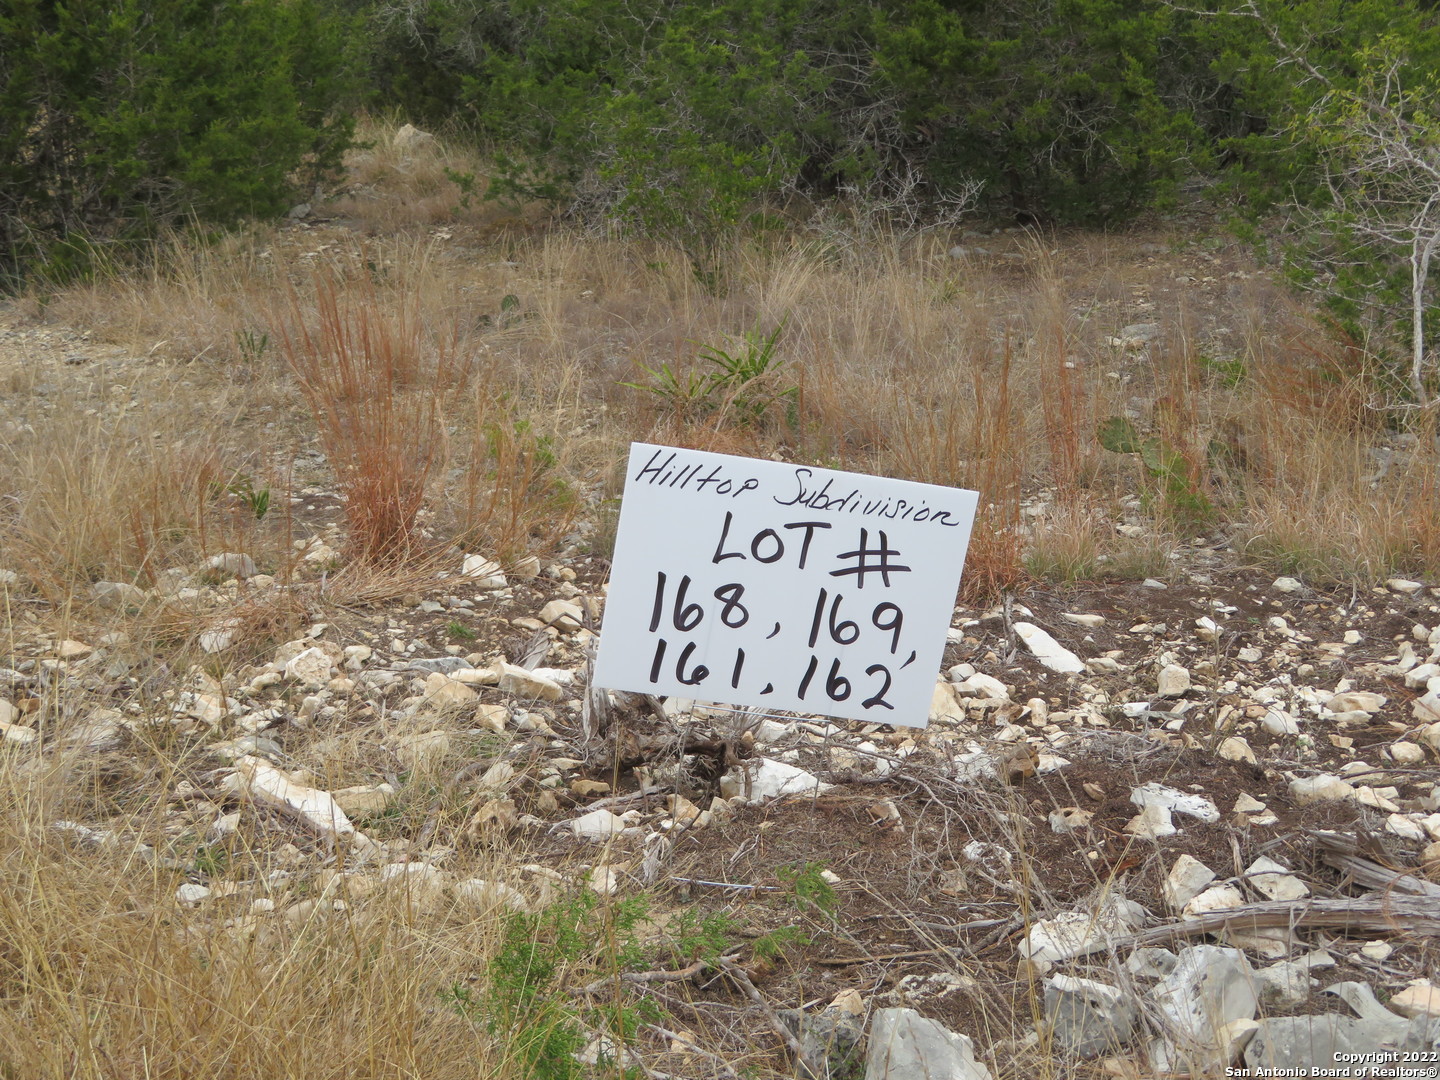 Photo of Lot 161-162 & Hilltop Cir in Lakehills, TX